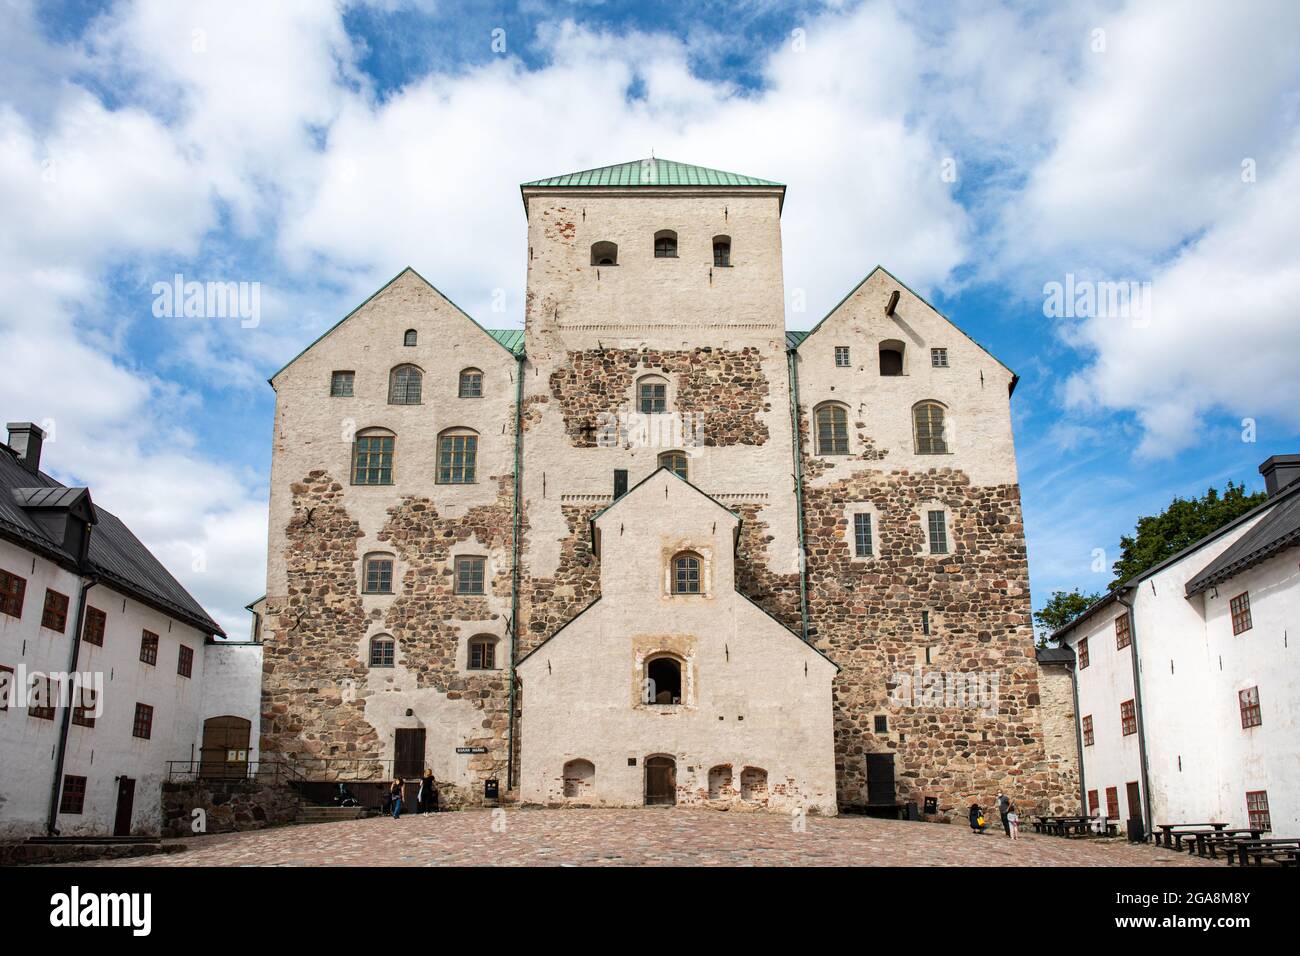 Medieval Turku Castle or Turun linna in Turku, Finland Stock Photo